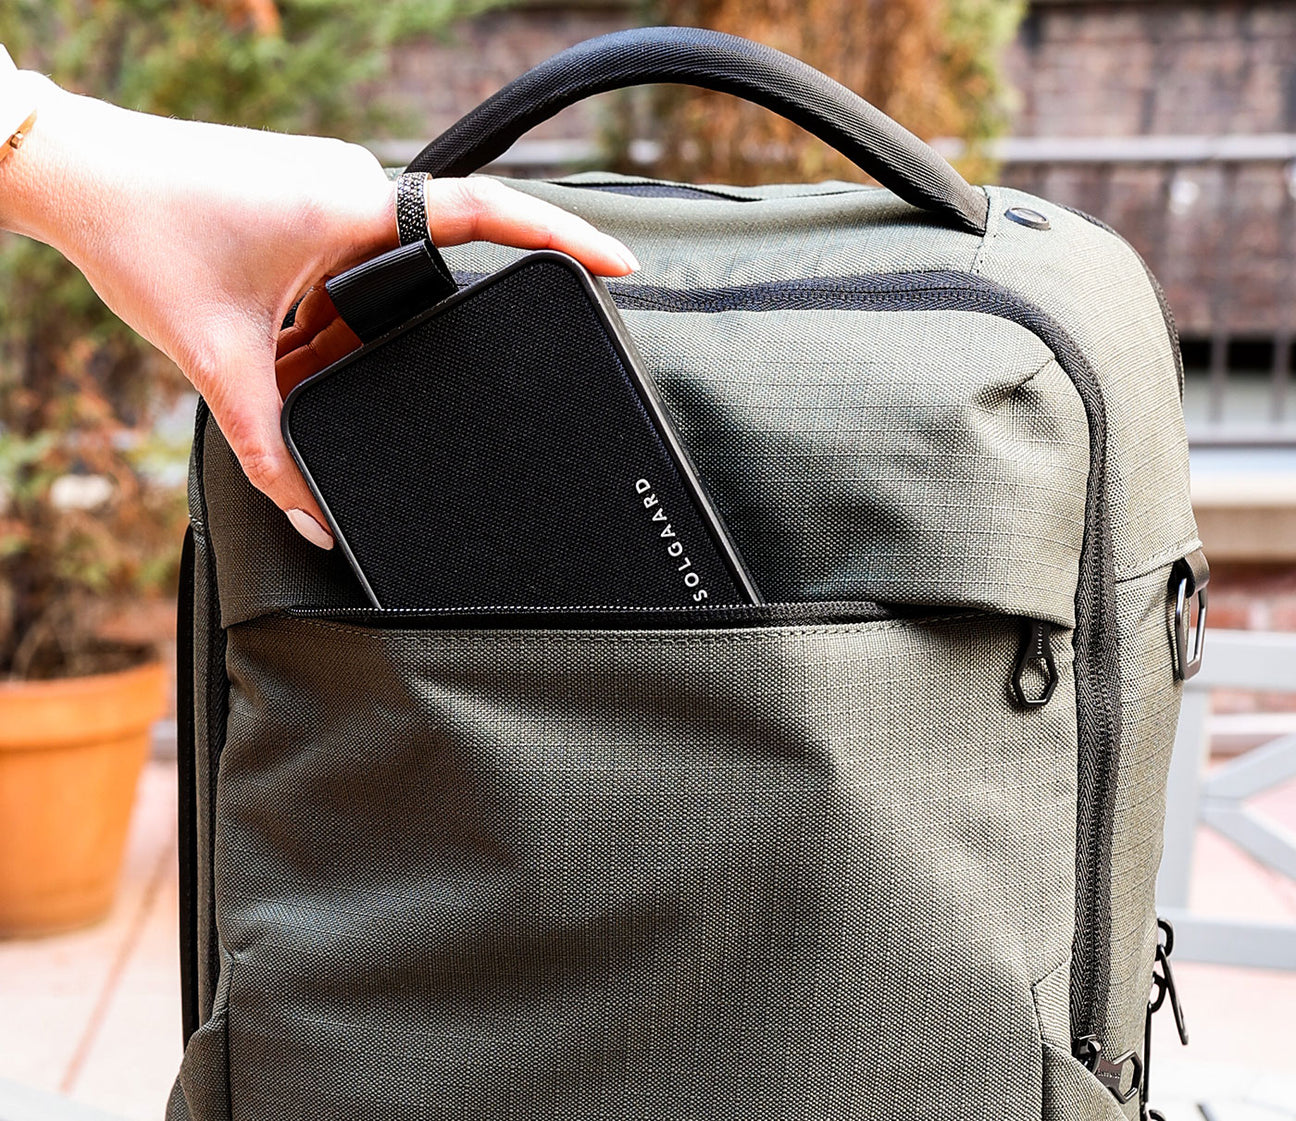 solgaard endeavor backpack with closet front pocket